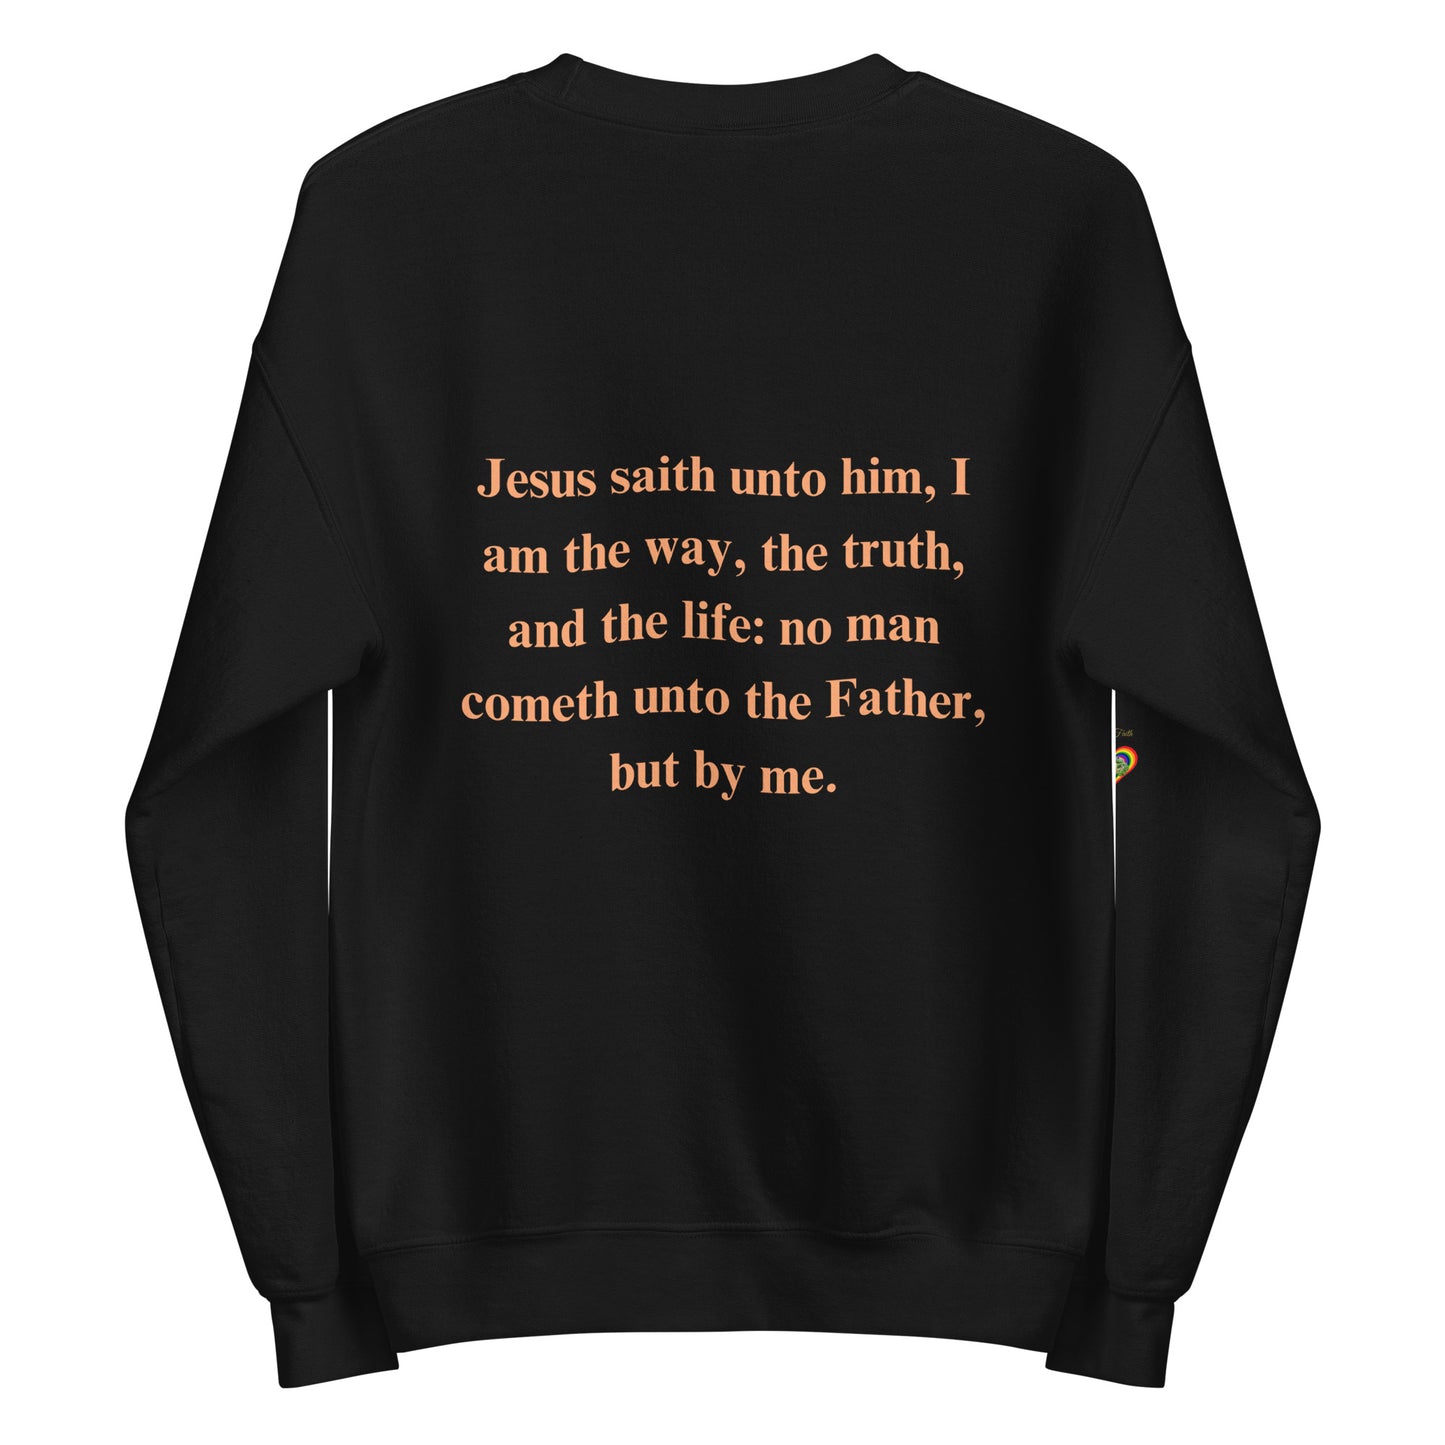 By Faith Jesus Christ Saves John 14:6 Unisex Sweatshirt